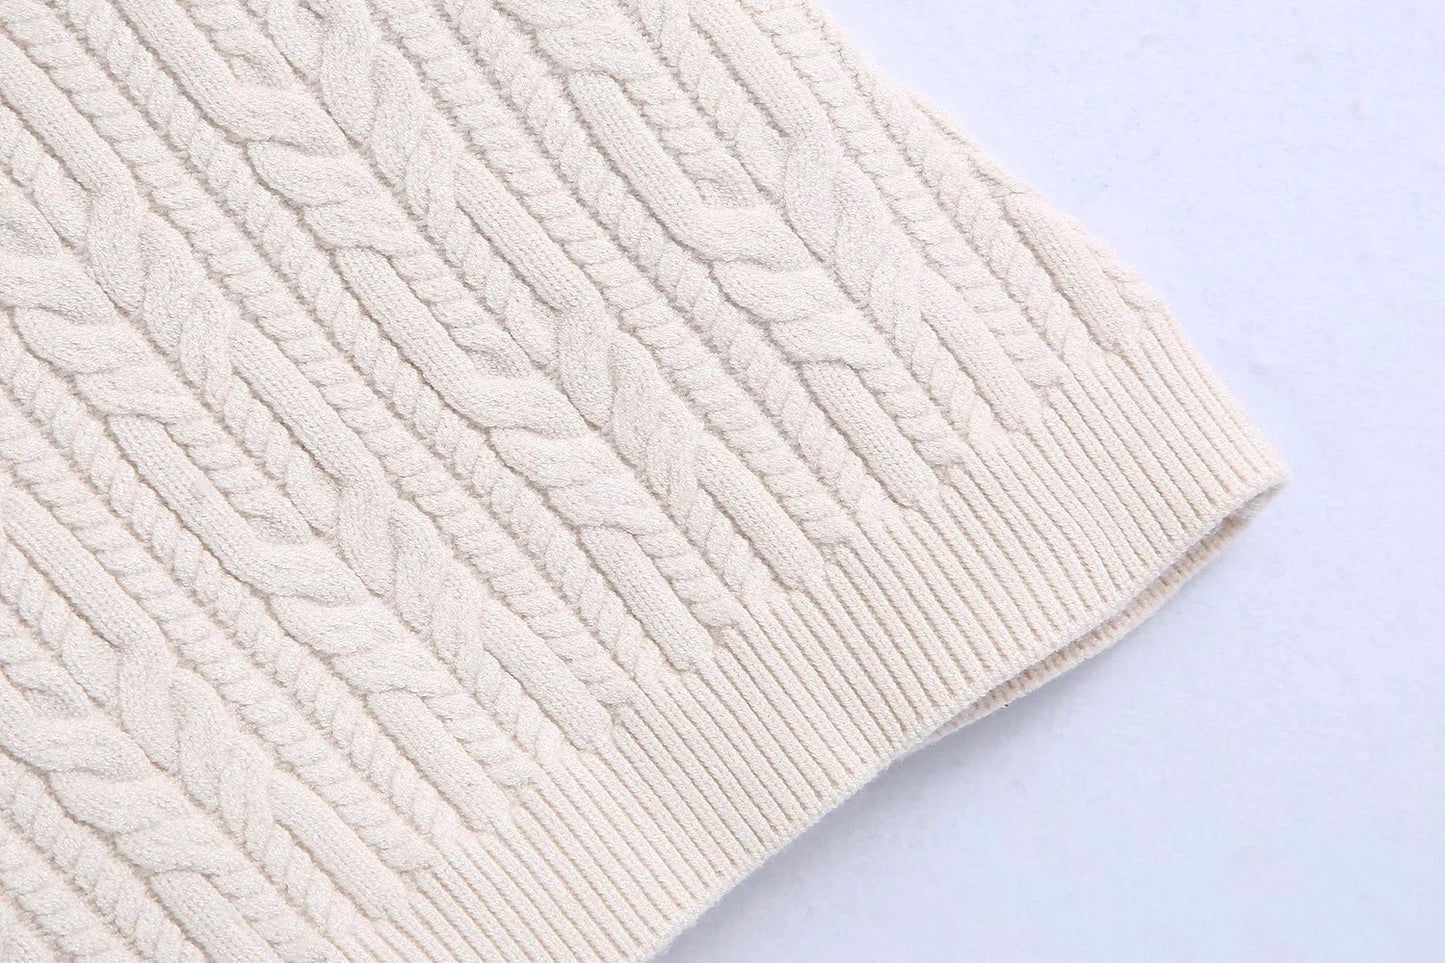 aespa Karina Inspired White One-Shoulder Sweater